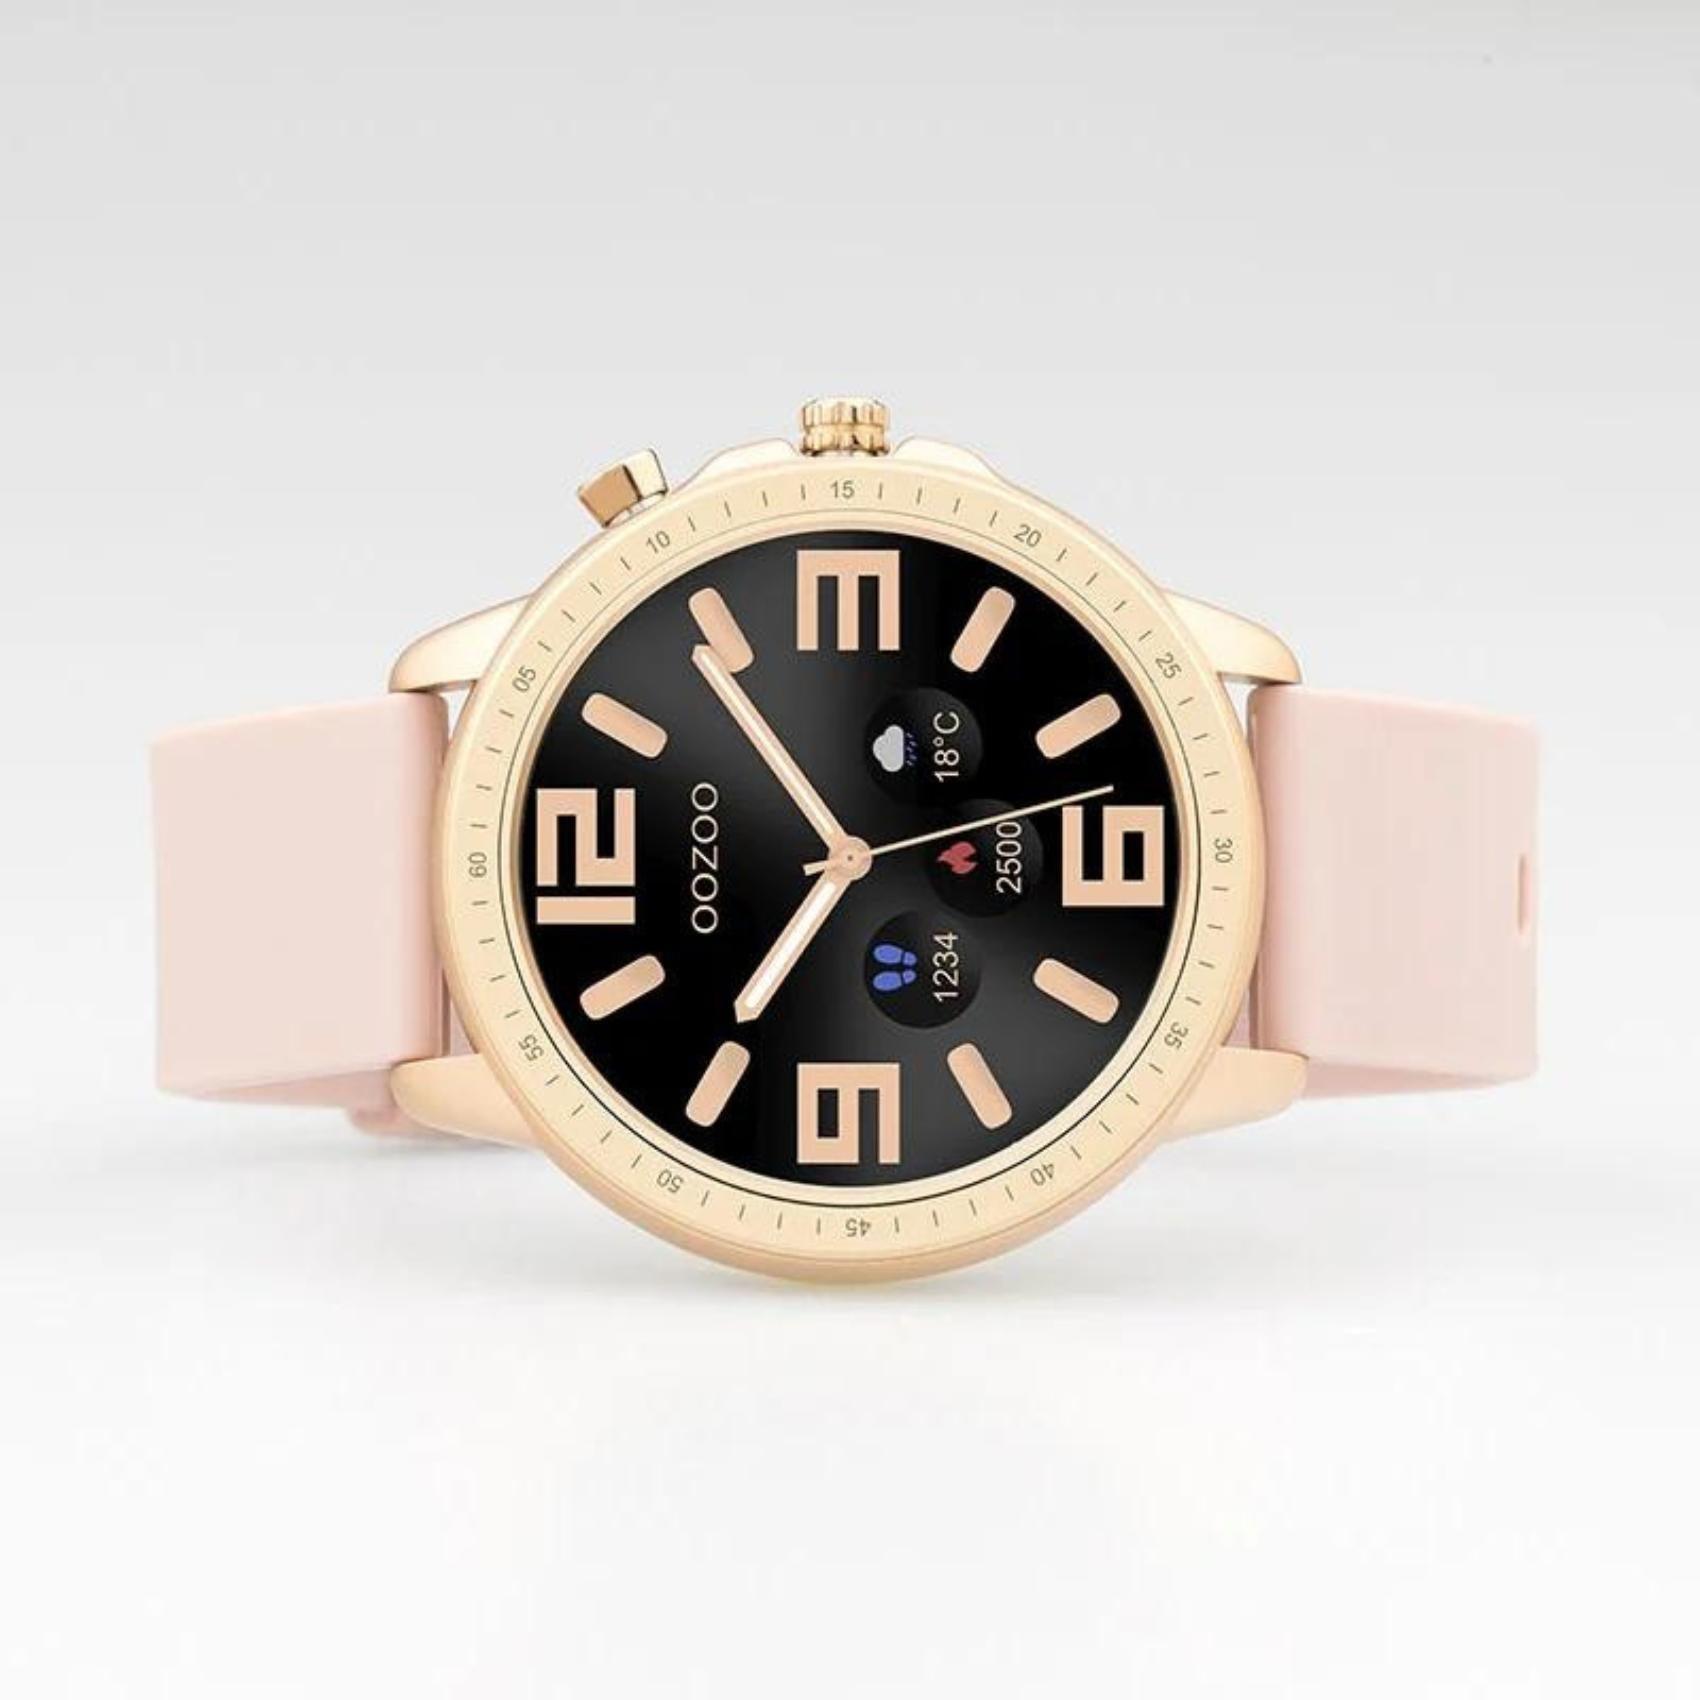 Smartwatch Oozoo Q00324 με άσπρο καουτσούκ λουράκι και ροζ χρυσή κάσα.